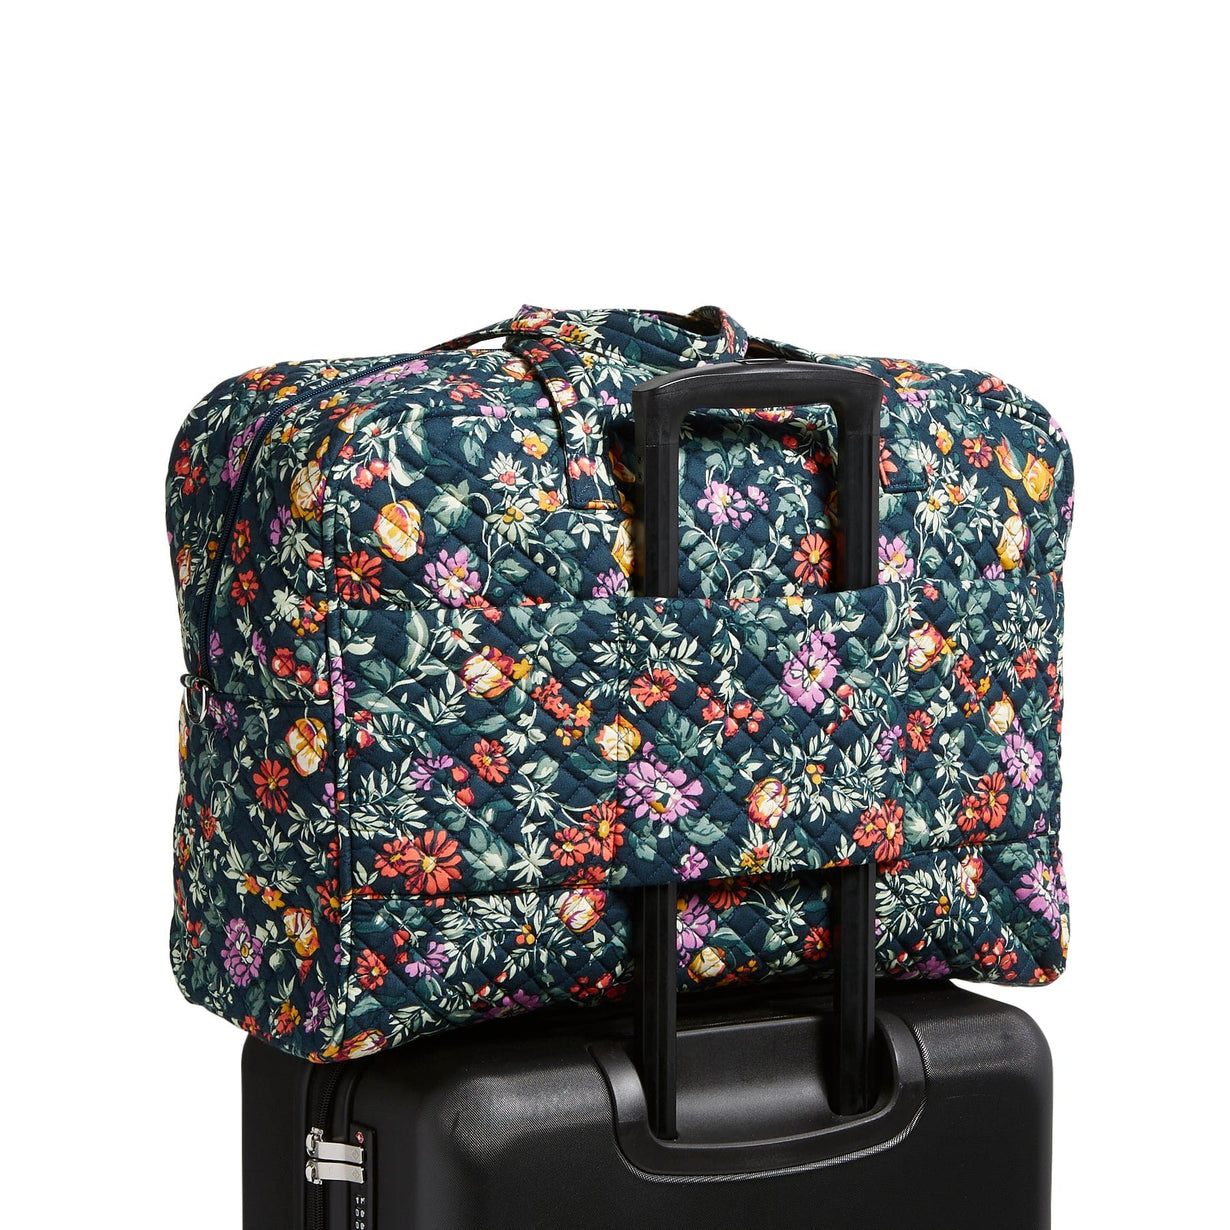 Vera bradley Iconic Weekender Travel Bag - Water Bouquet 3